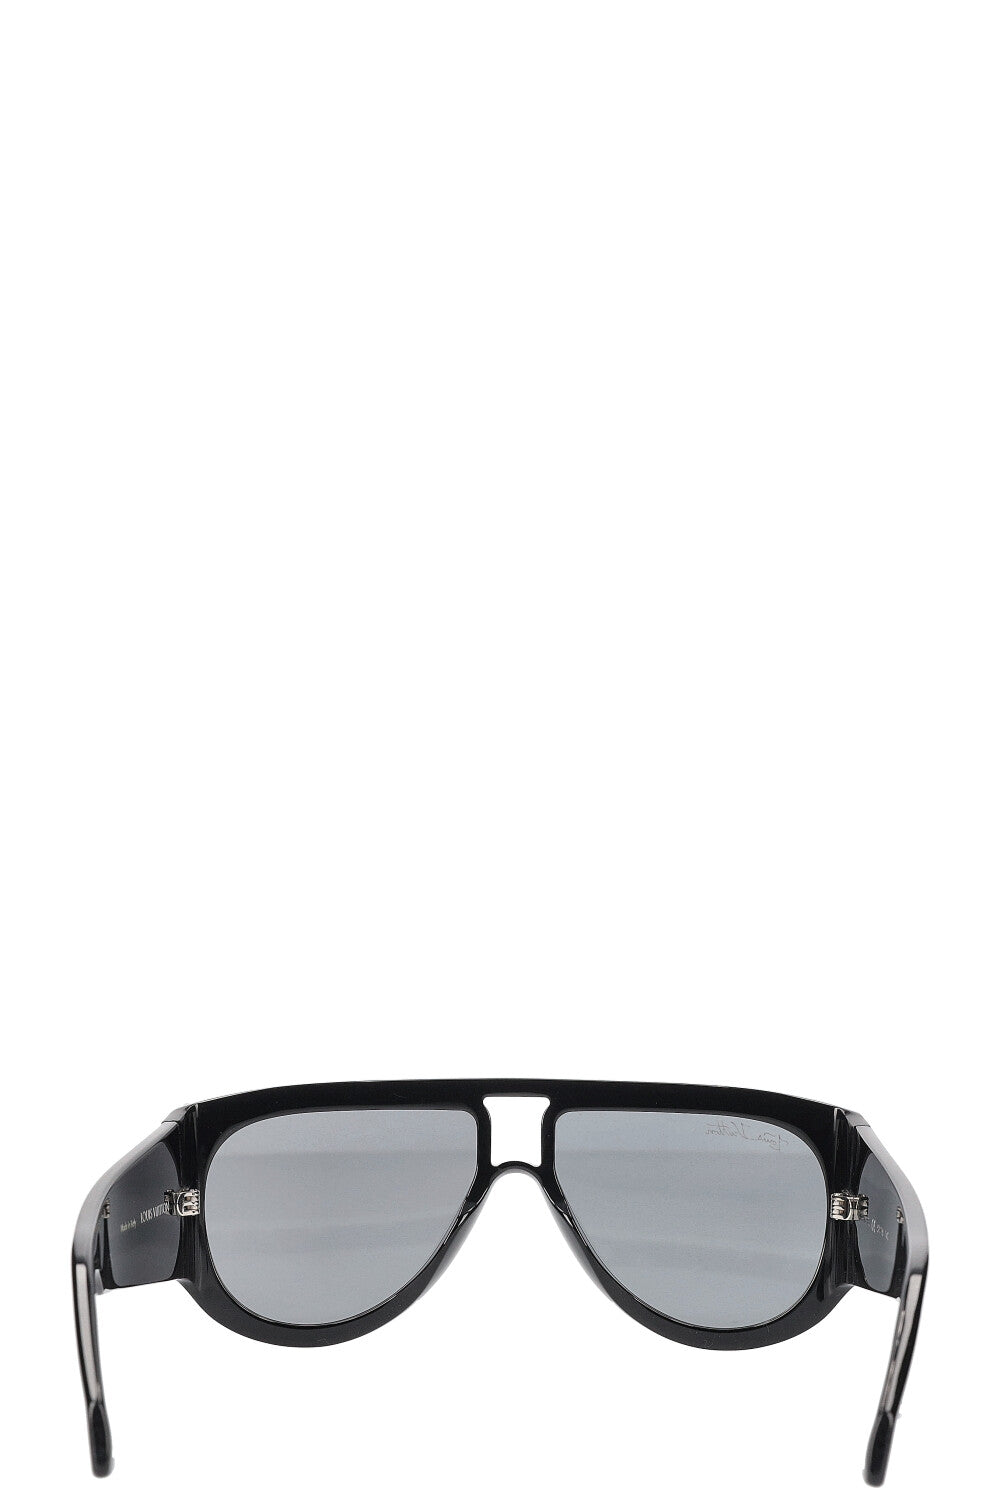 Selby sunglasses Louis Vuitton Black in Plastic - 31399950